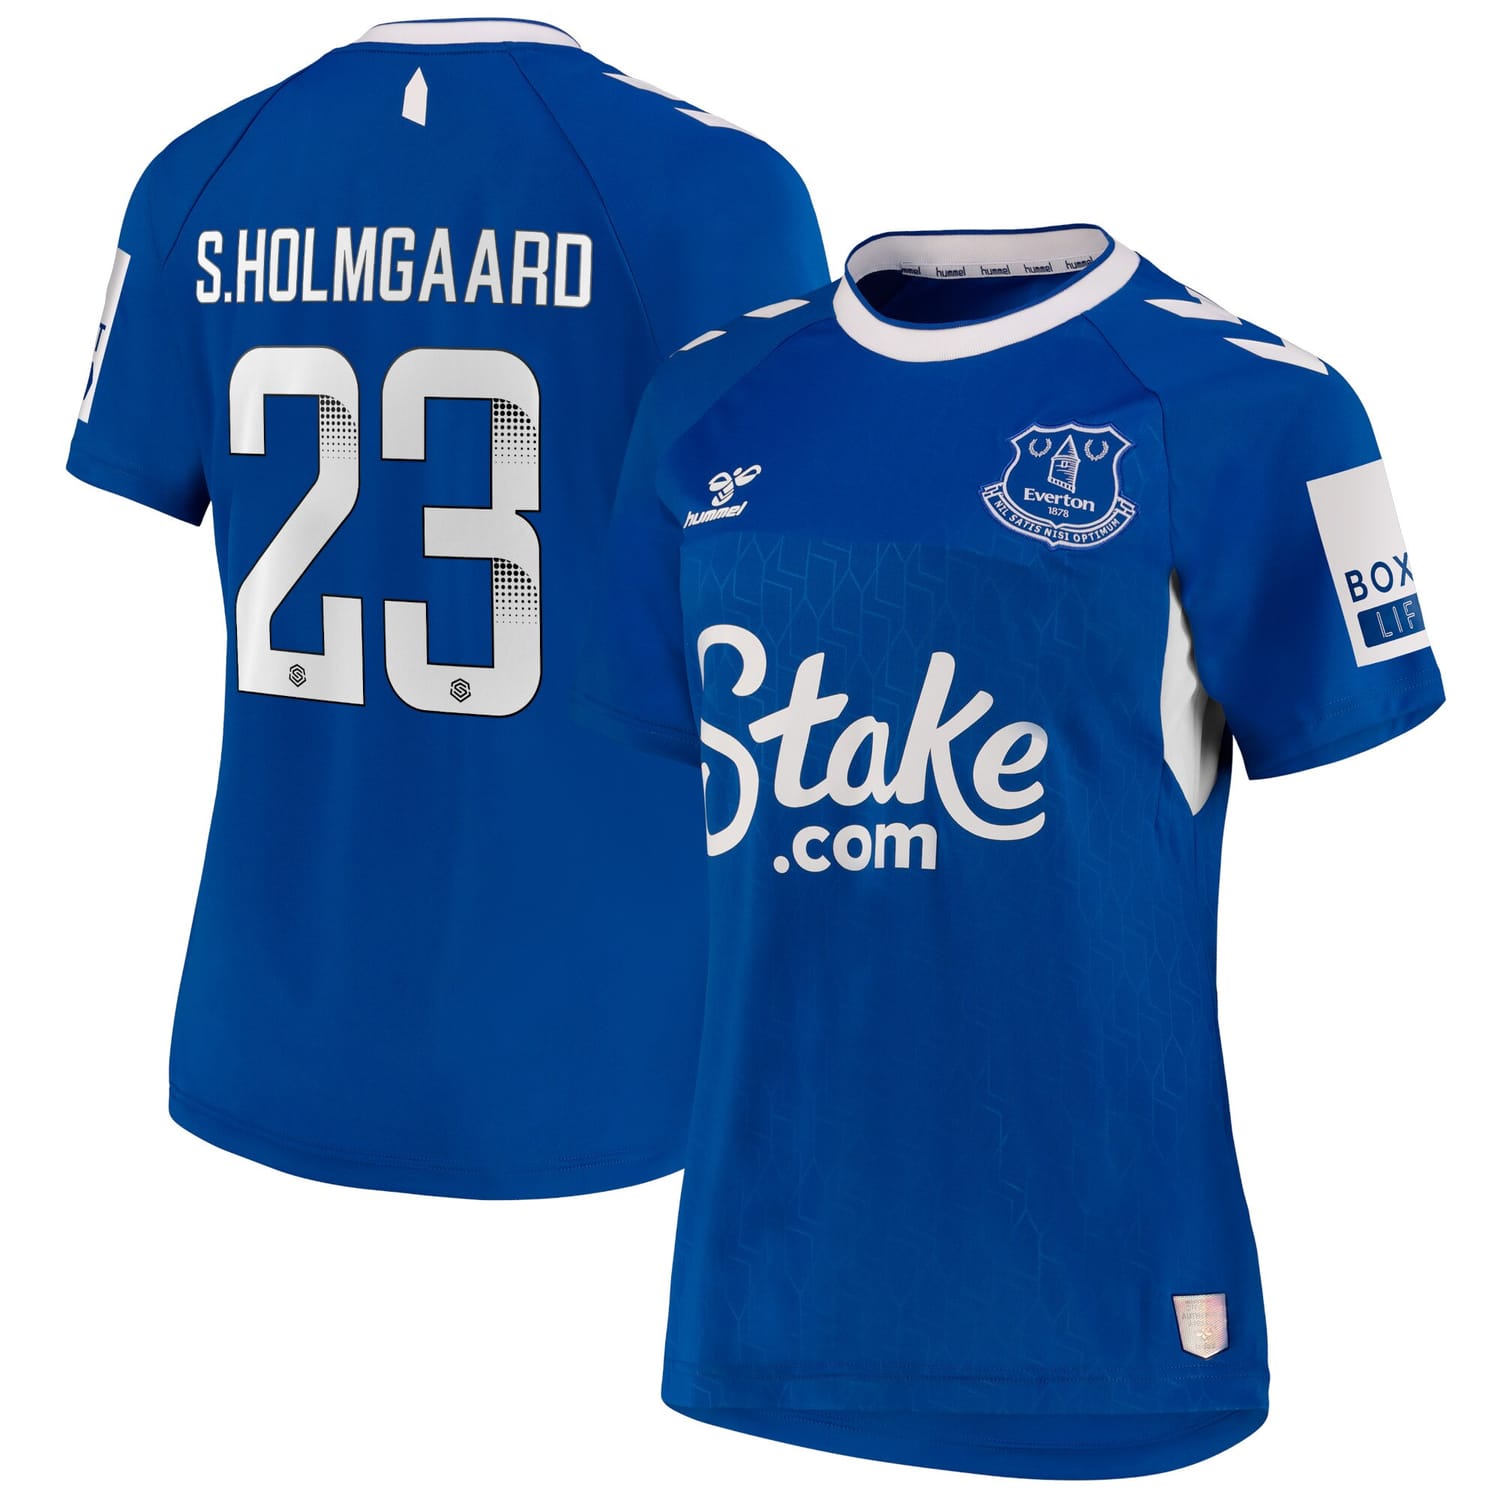 Premier League Everton Home WSL Jersey Shirt 2022-23 player Sara Holmgaard 23 printing for Women